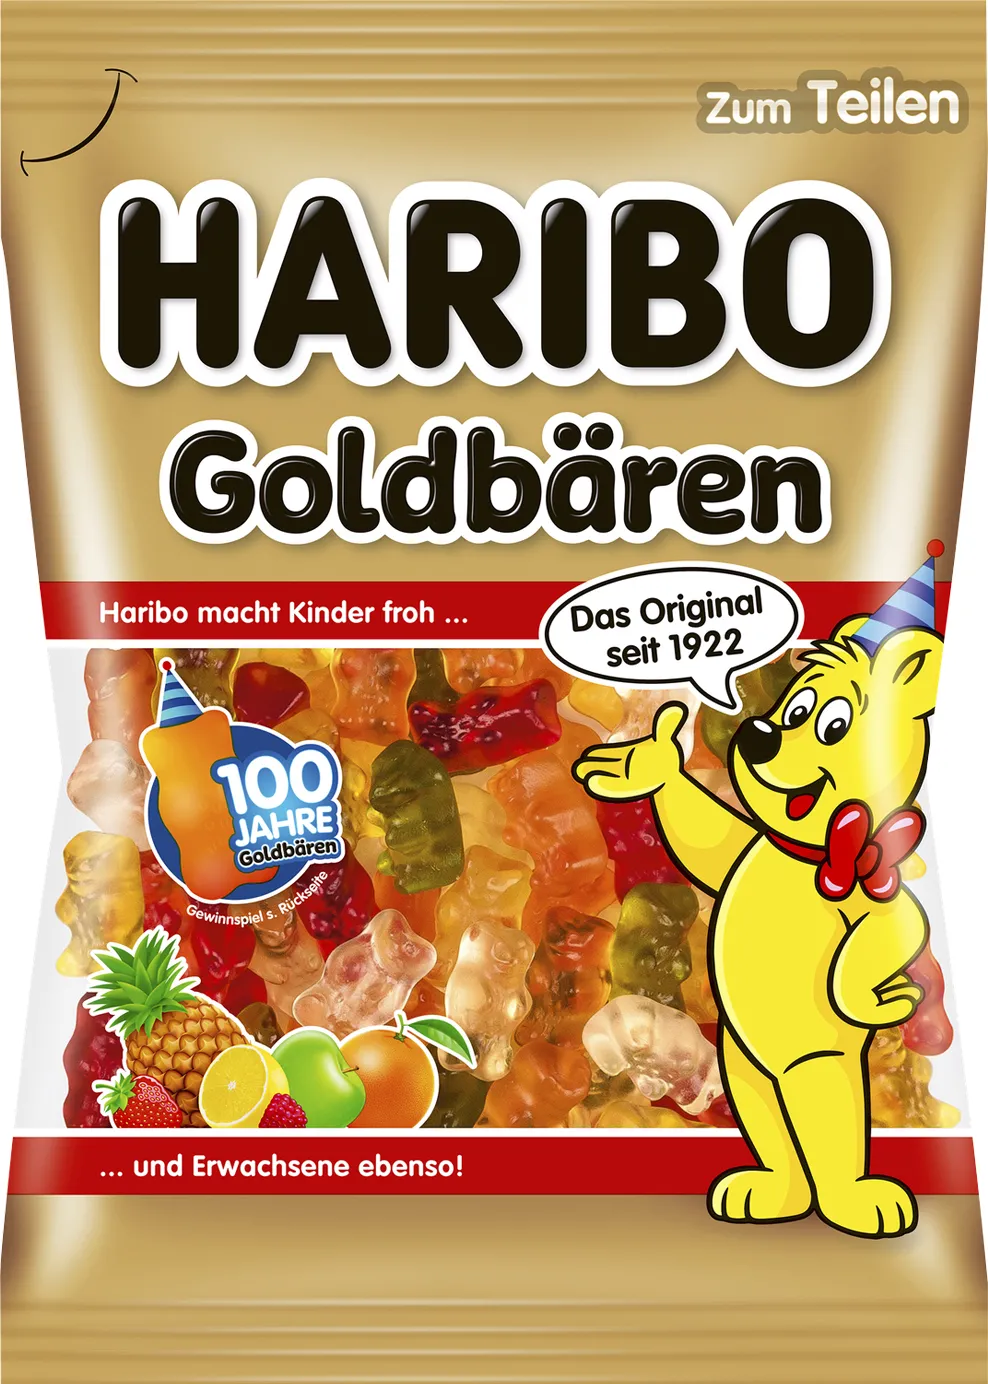 Haribo Goldbear 100th anniversary packaging, 2022